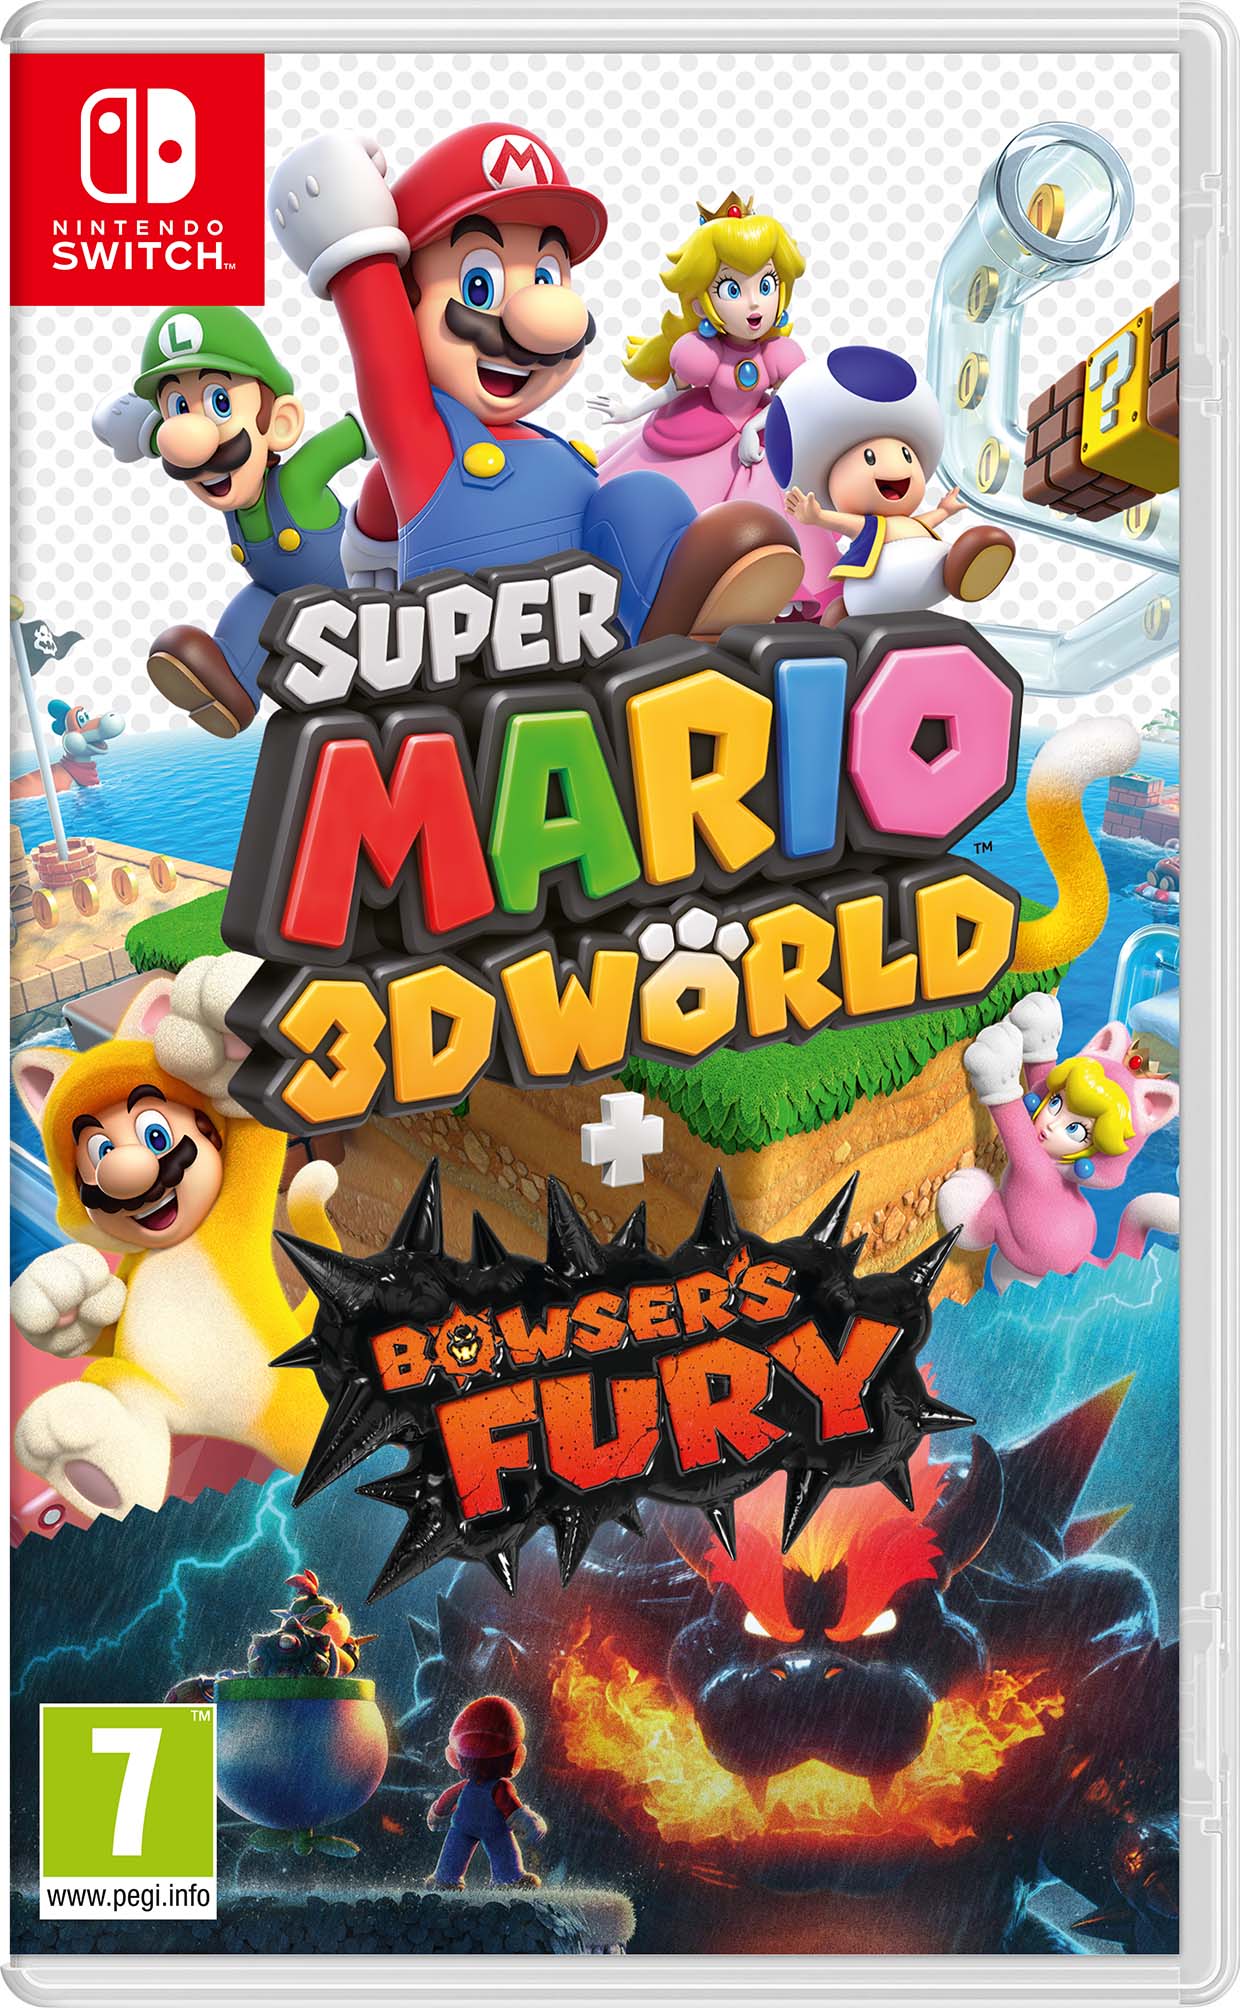 Super Mario 3D world & bowsers Fury